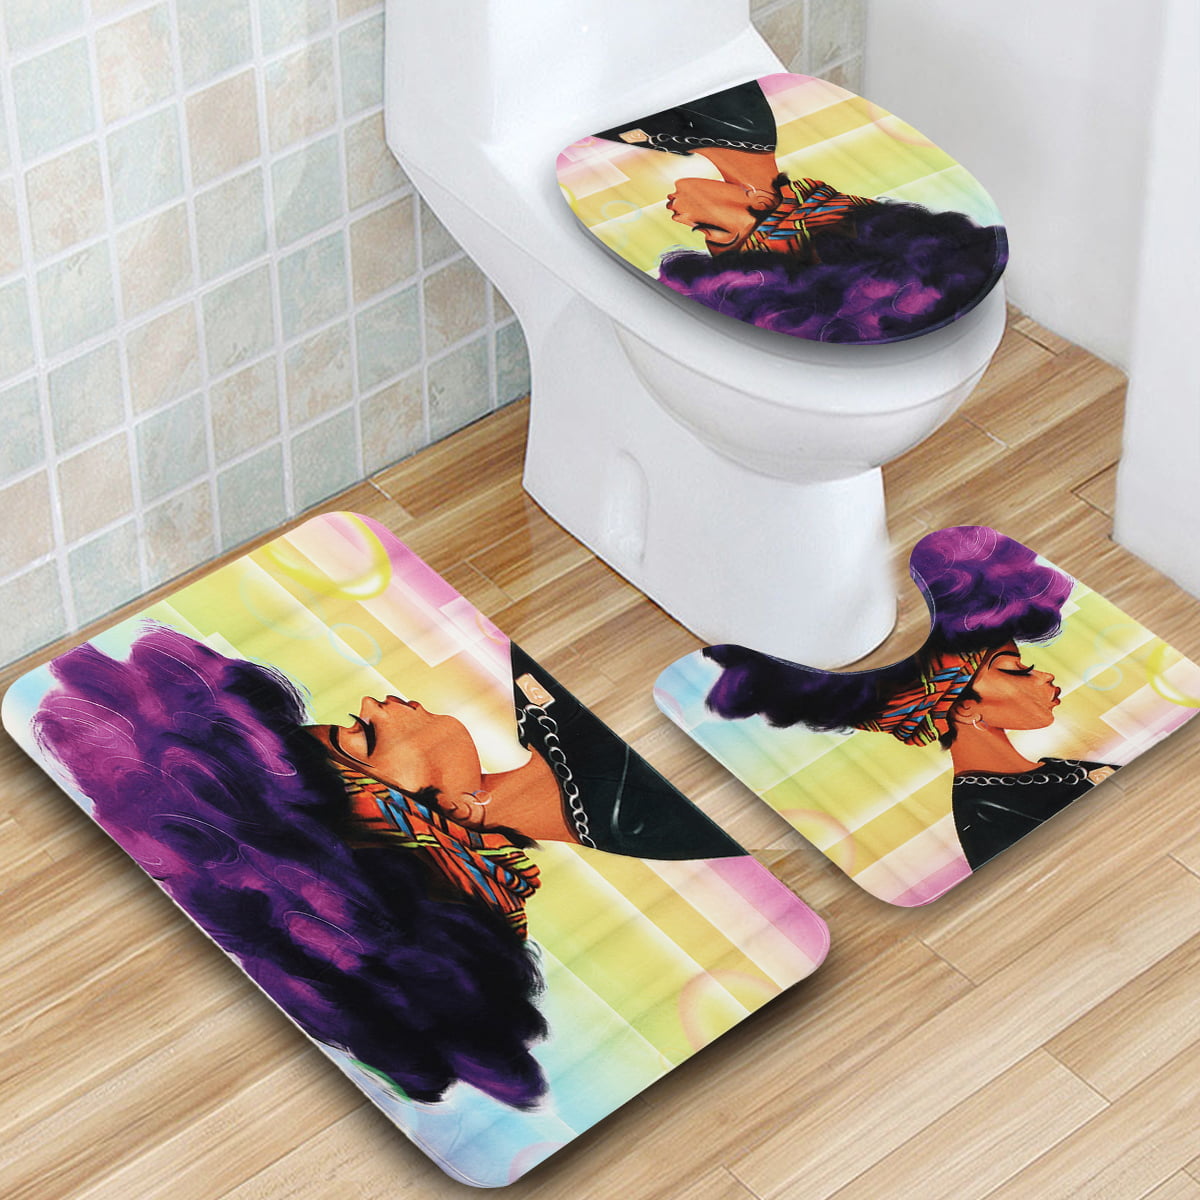 Bath mat set 3 pcs non slip pedestal mat chunky bathroom rug toilet cover #2 